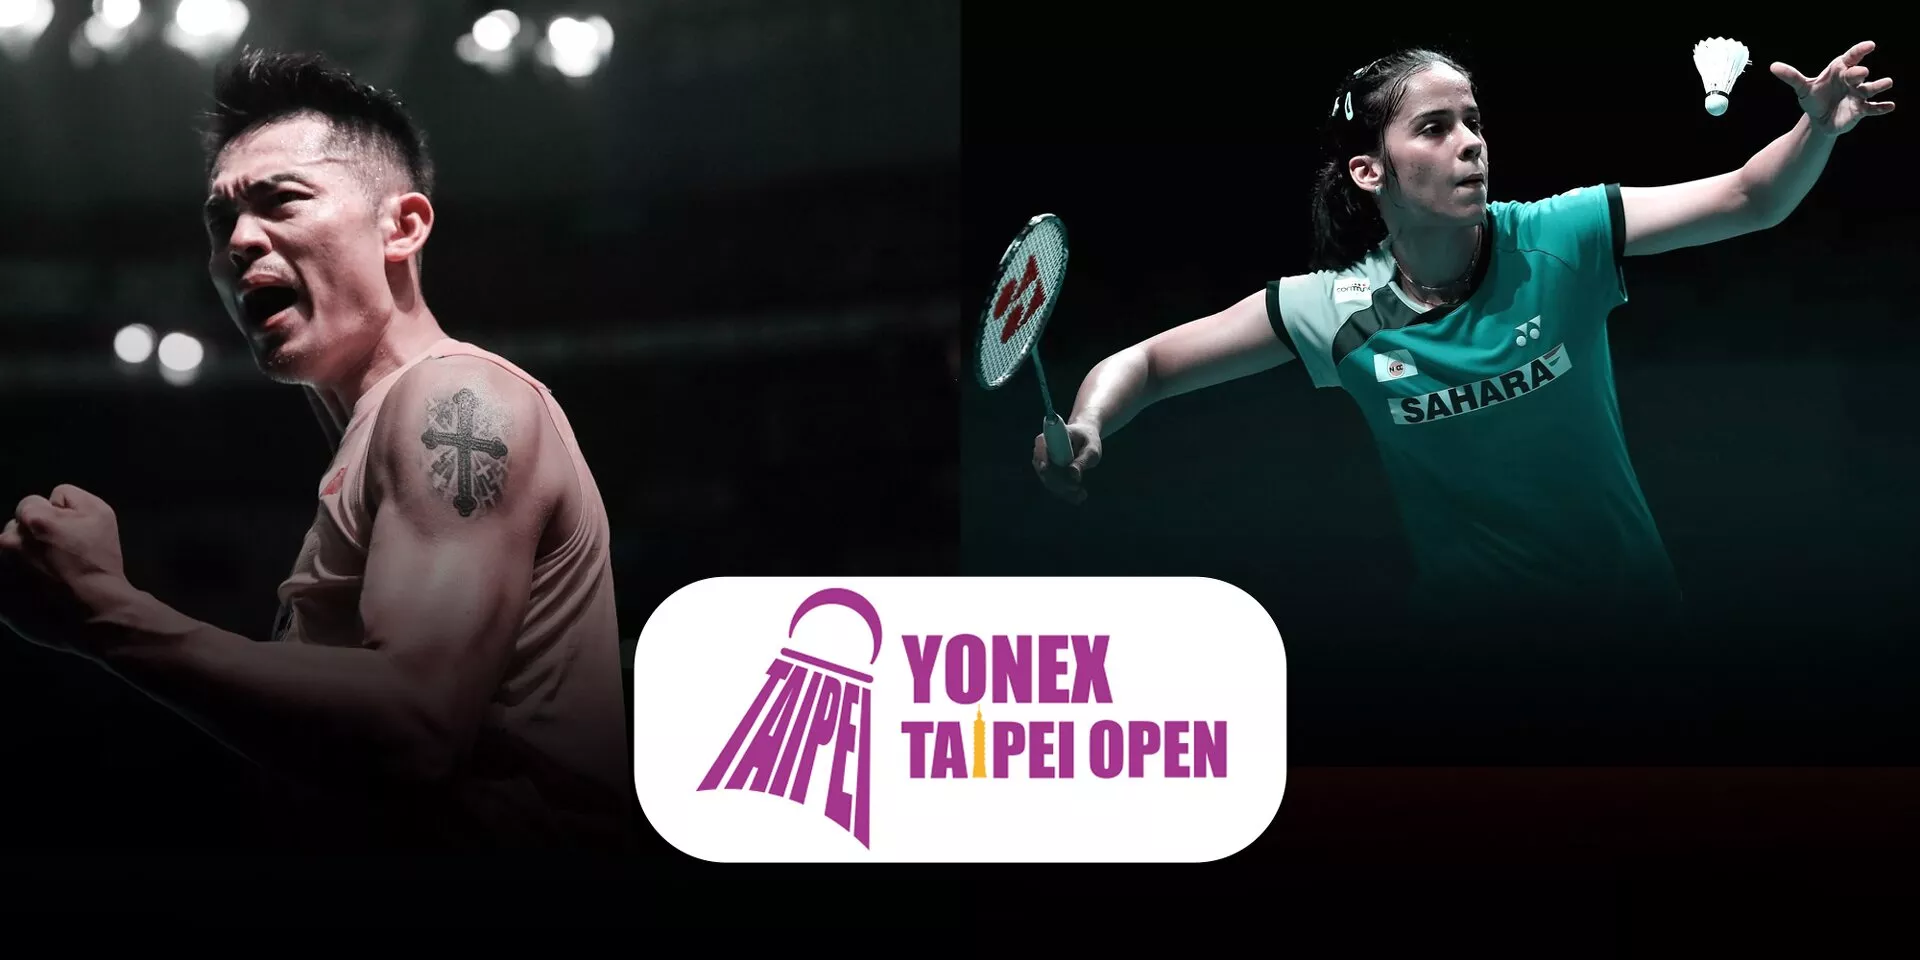 Taipei Open Full list of winners